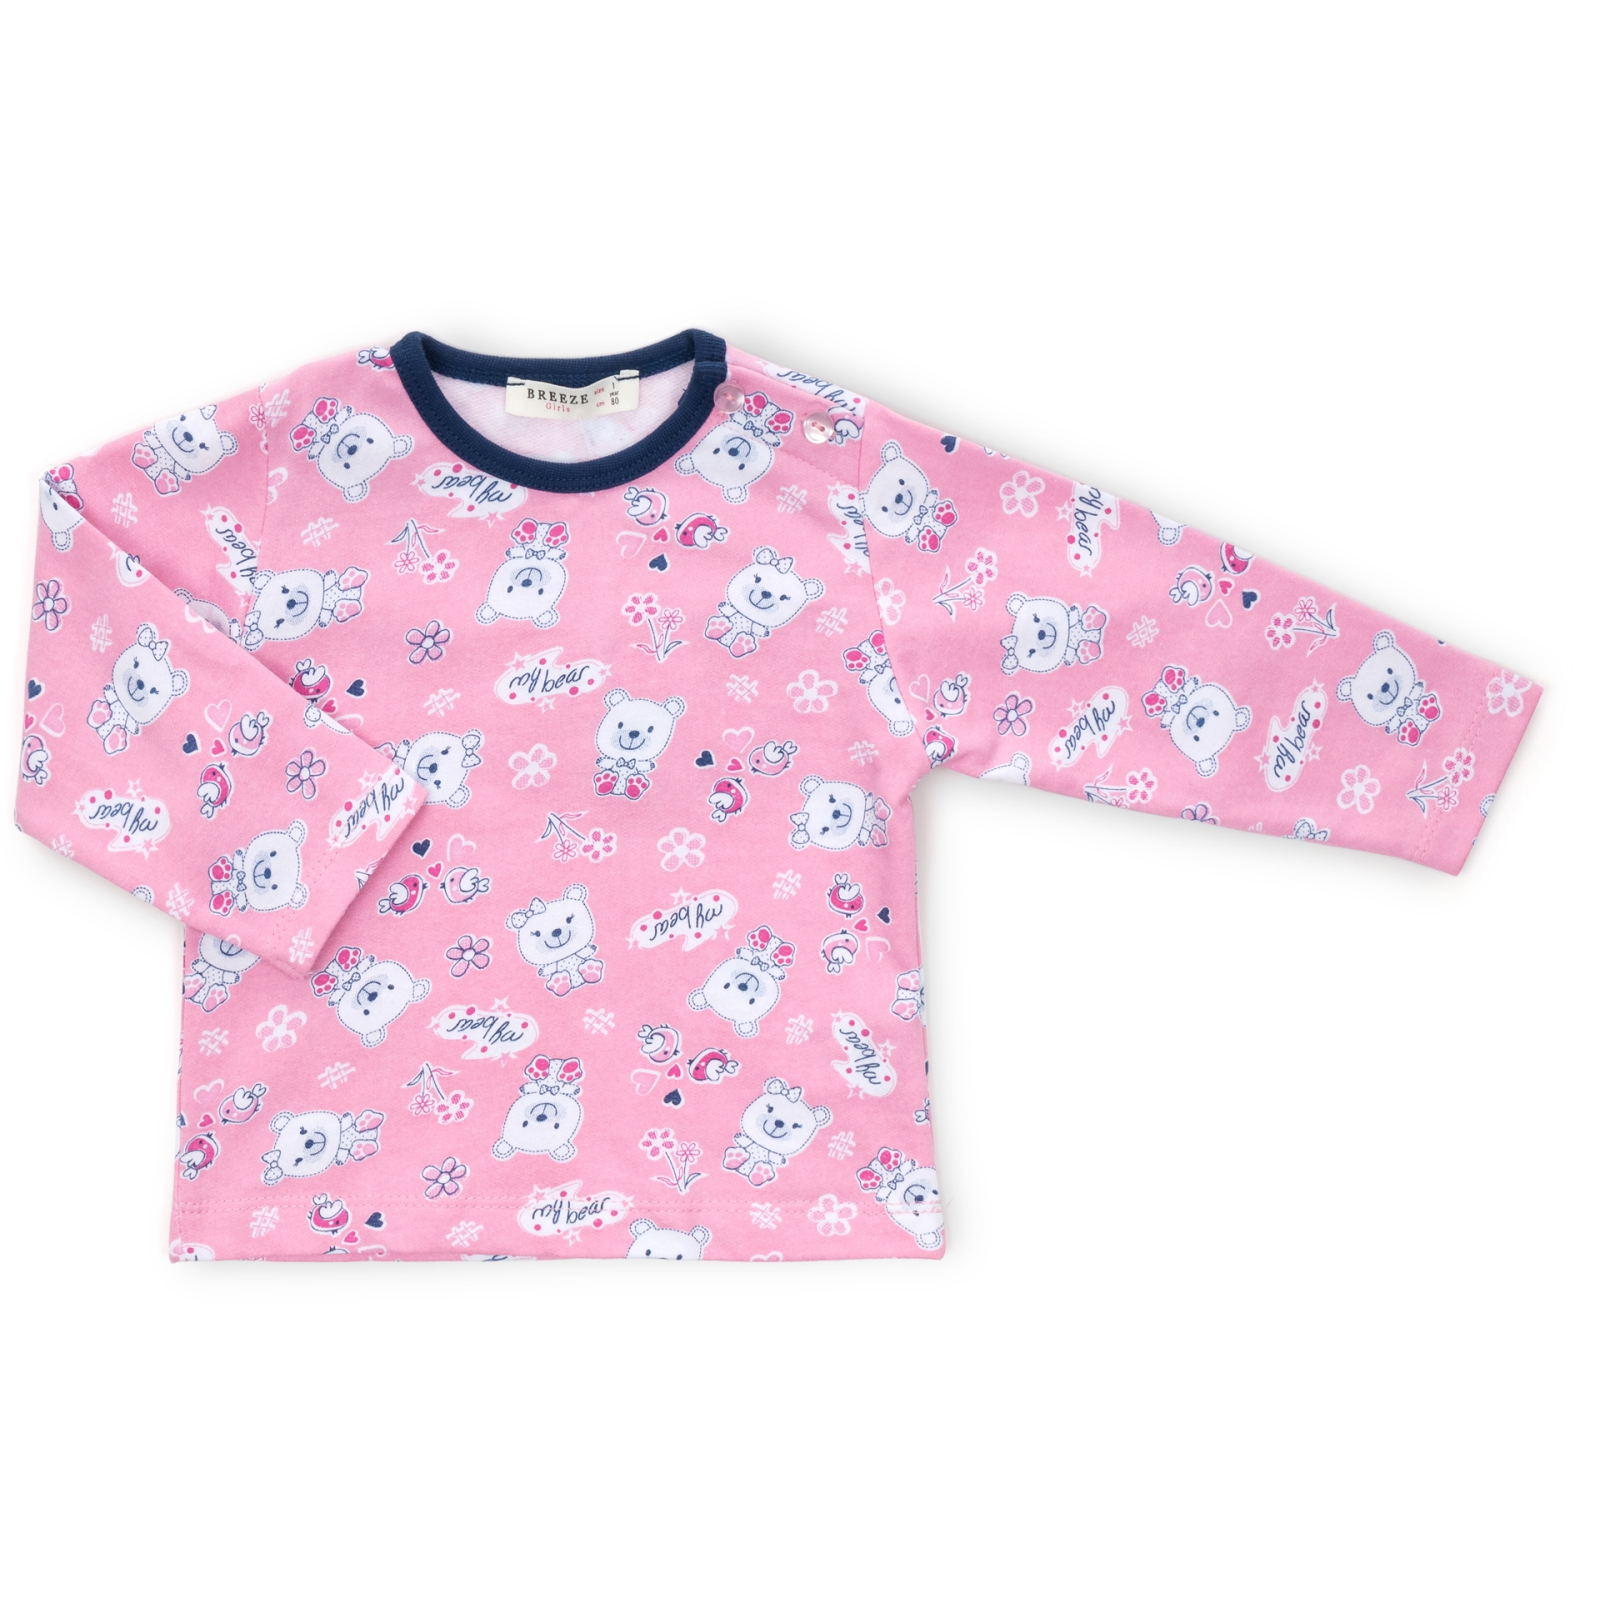 Пижама Breeze с мишками (8382-98G-pink) изображение 2